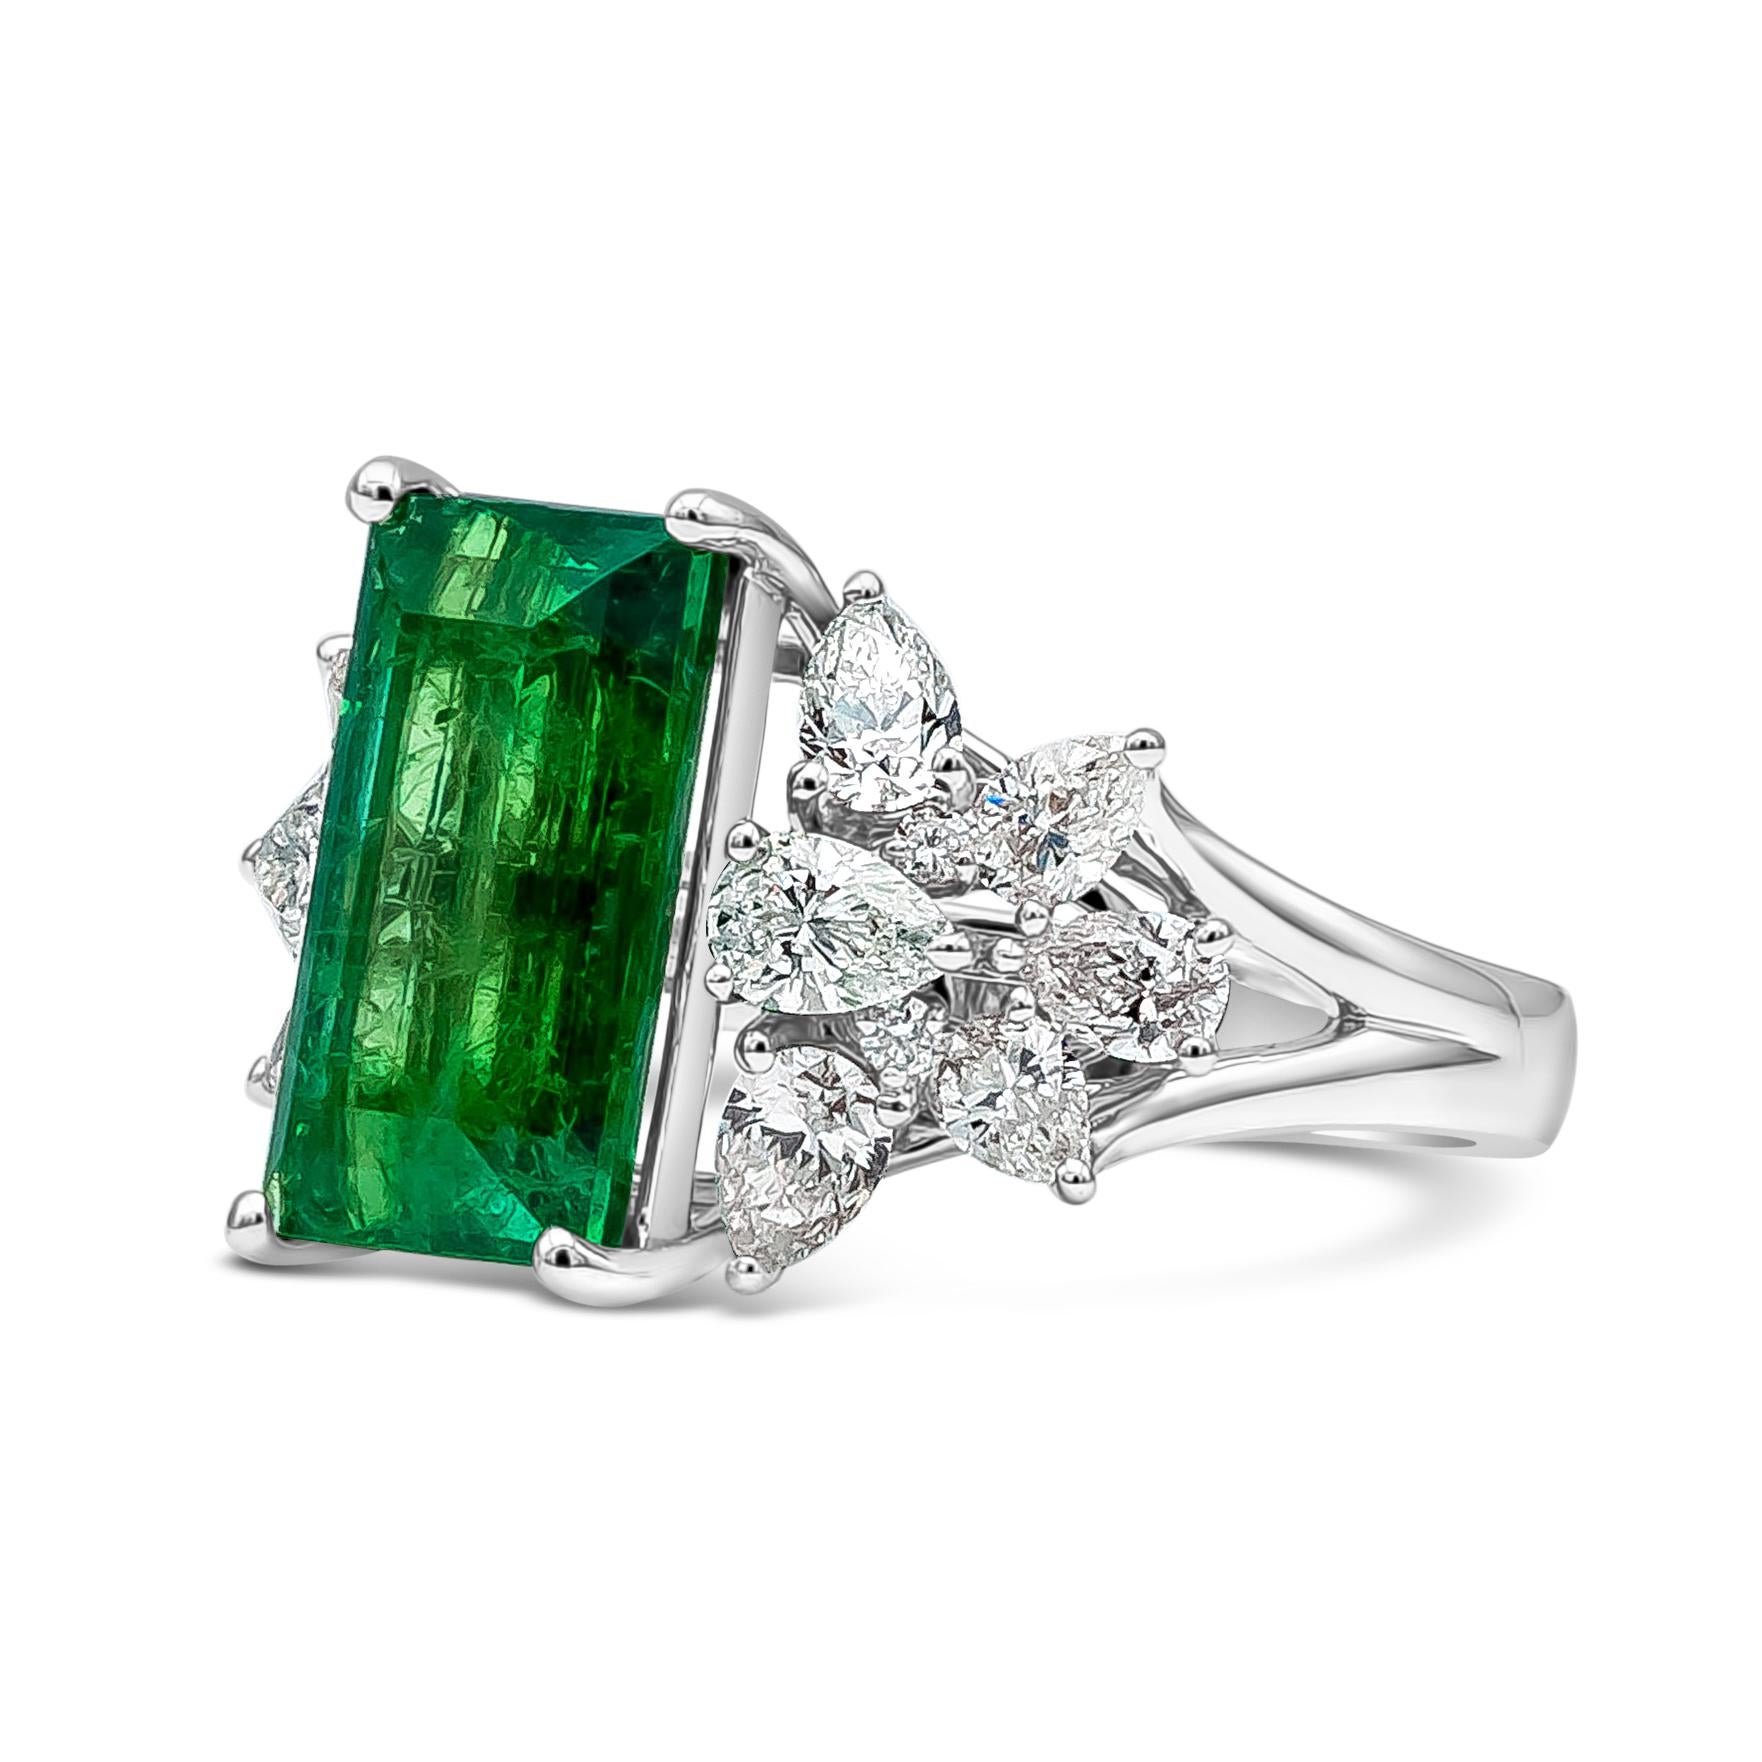 Gut gearbeiteter High-End-Schmuckmodeschmuckring mit einem GRS-zertifizierten grünen Smaragd von 5,40 Karat im Baguetteschliff. 12 birnenförmige Diamanten mit einem Gesamtgewicht von 1,99 Karat und 4 helle runde Diamanten mit einem Gesamtgewicht von